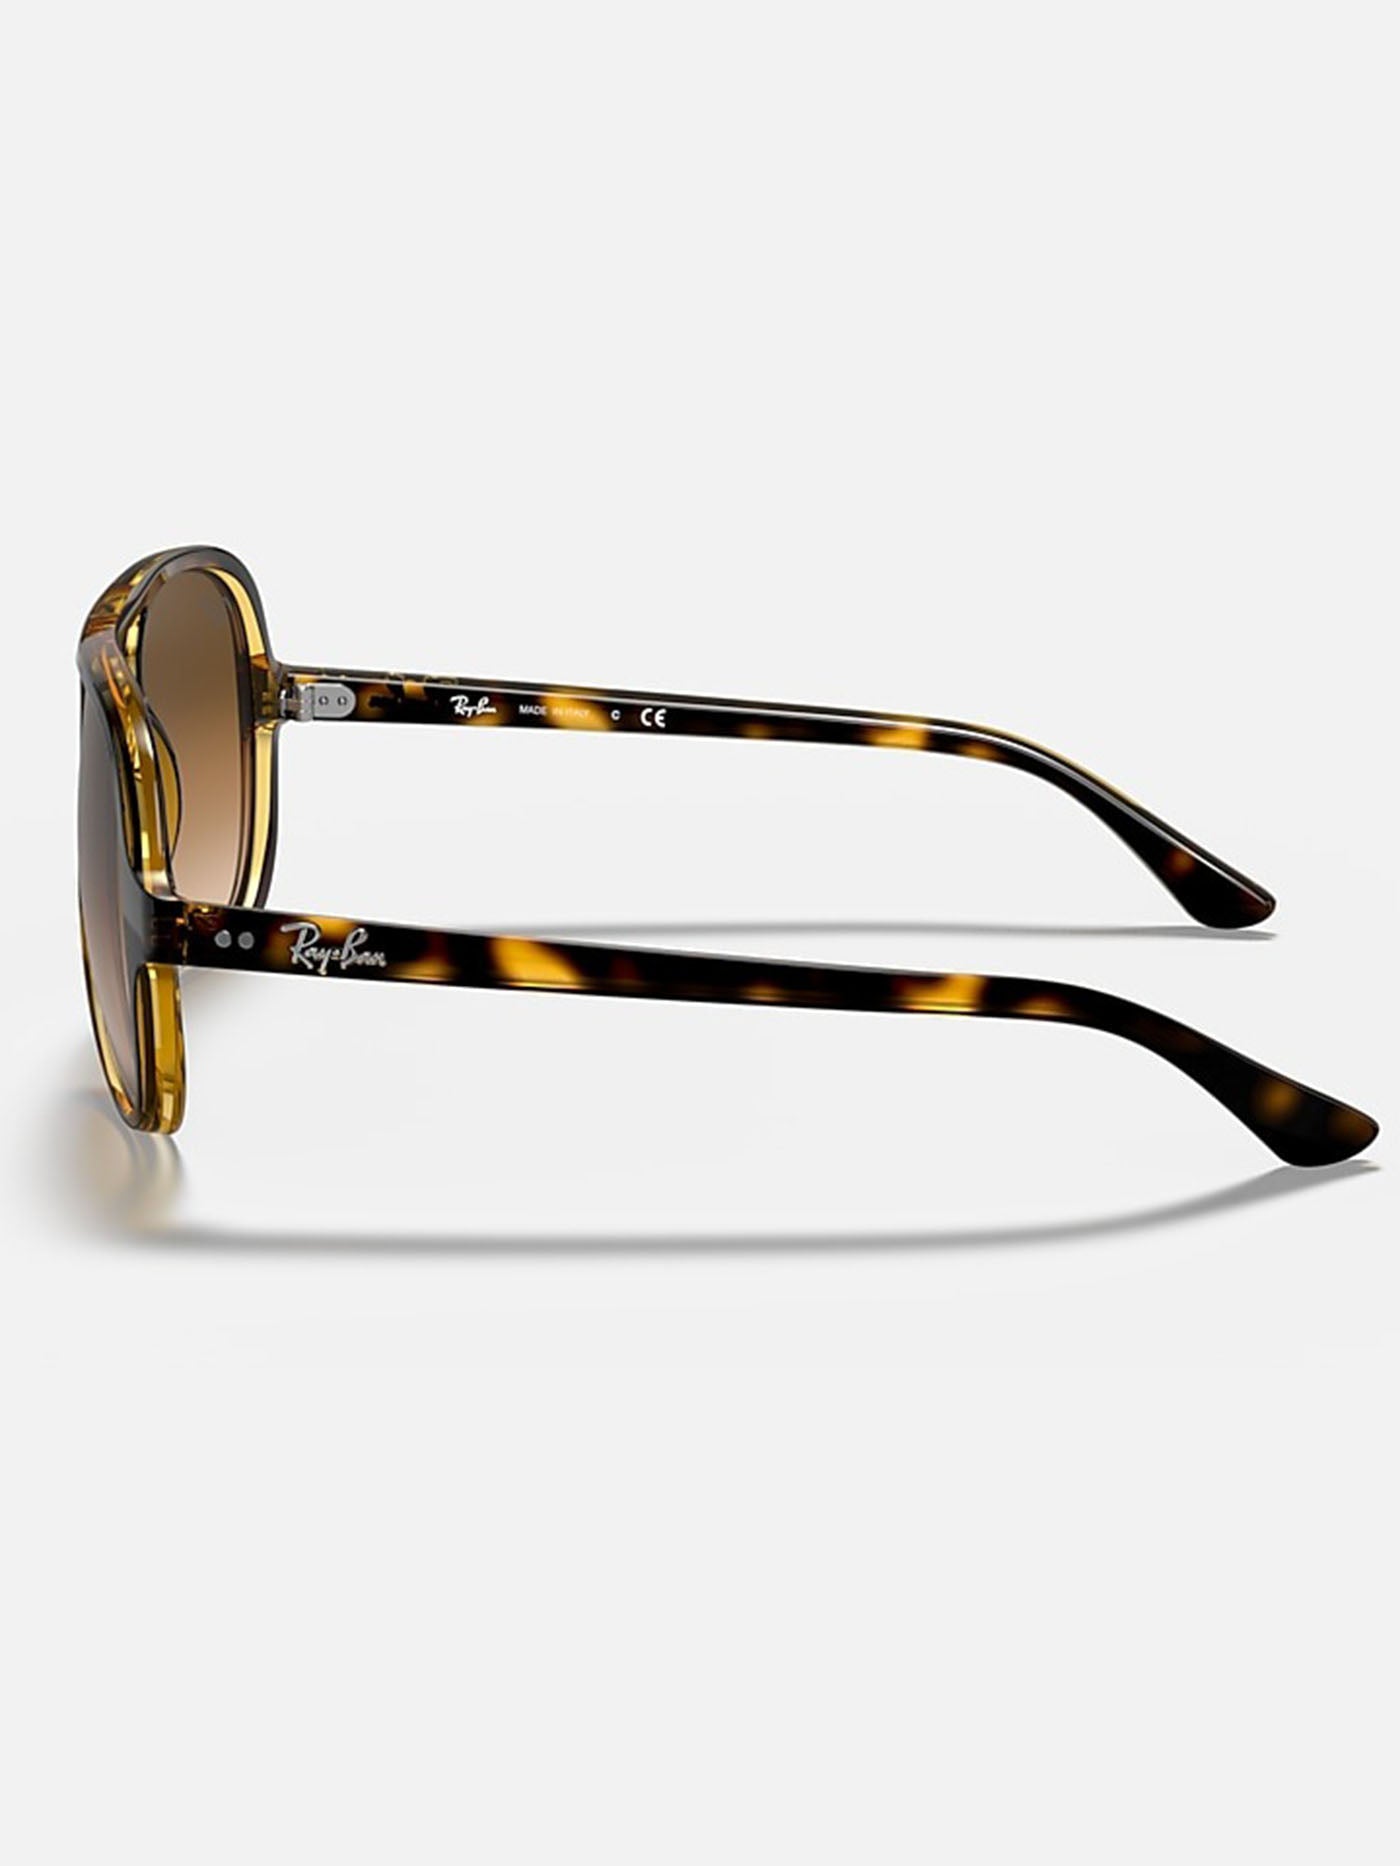 Ray Ban 2024 Cats 5000 Light Havana/Brown Gradient Sunglasses